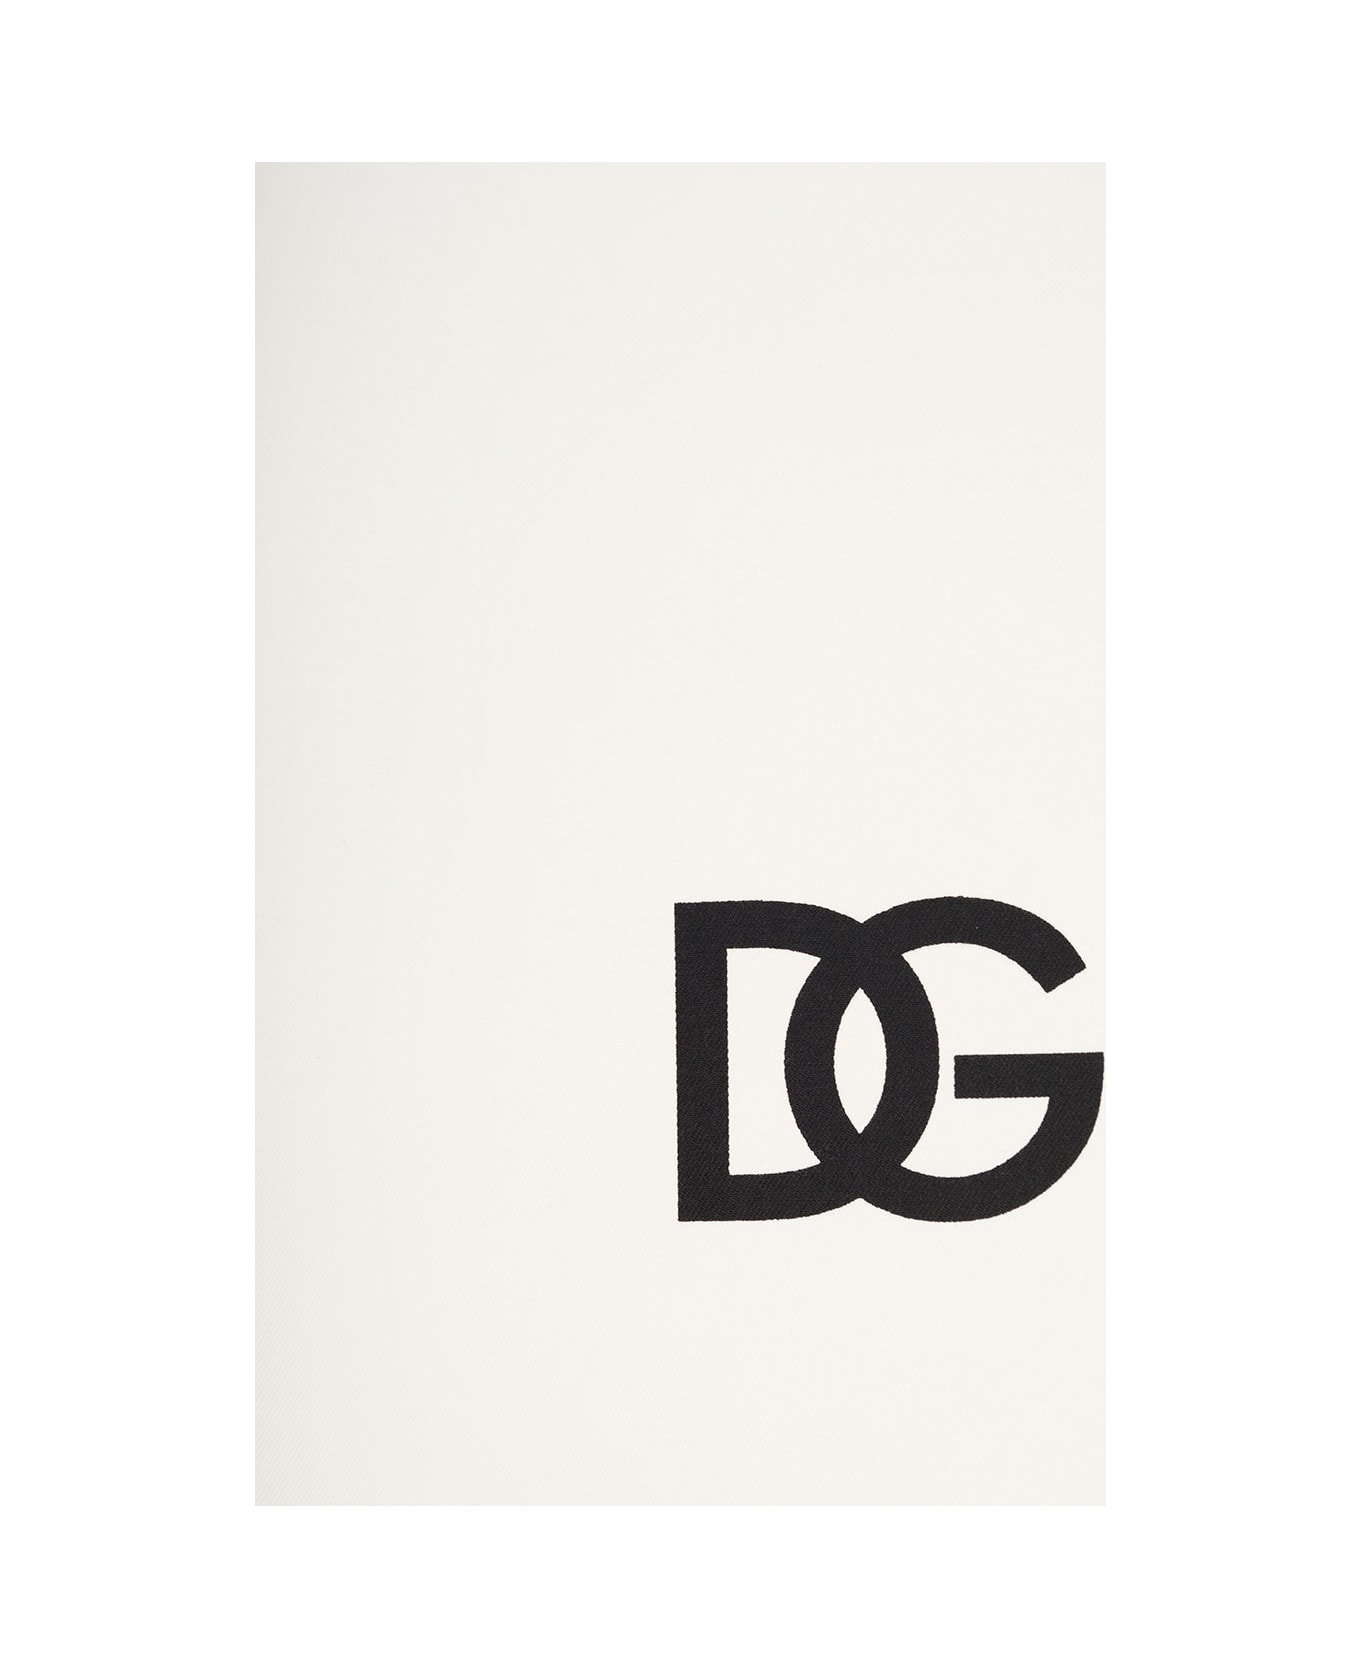 Dolce & Gabbana White And Black Cushion With Contrasting Dg Logo Print In Cotton - White インテリア雑貨